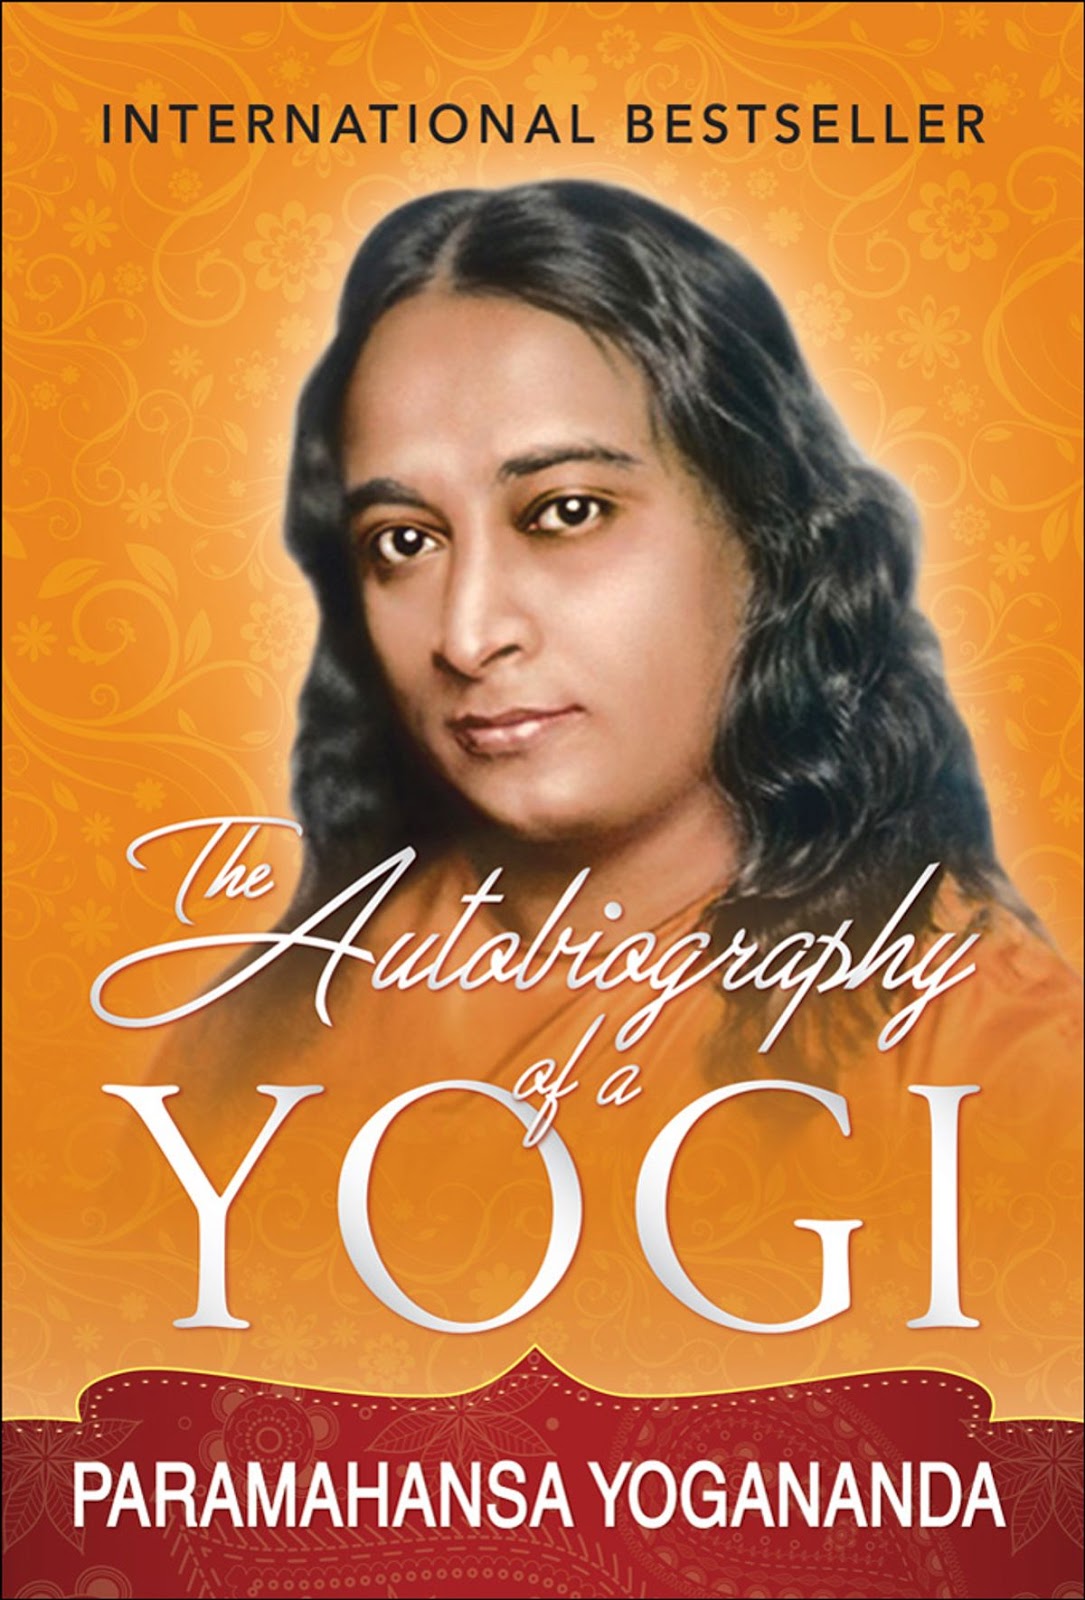 autobiography of yogi online